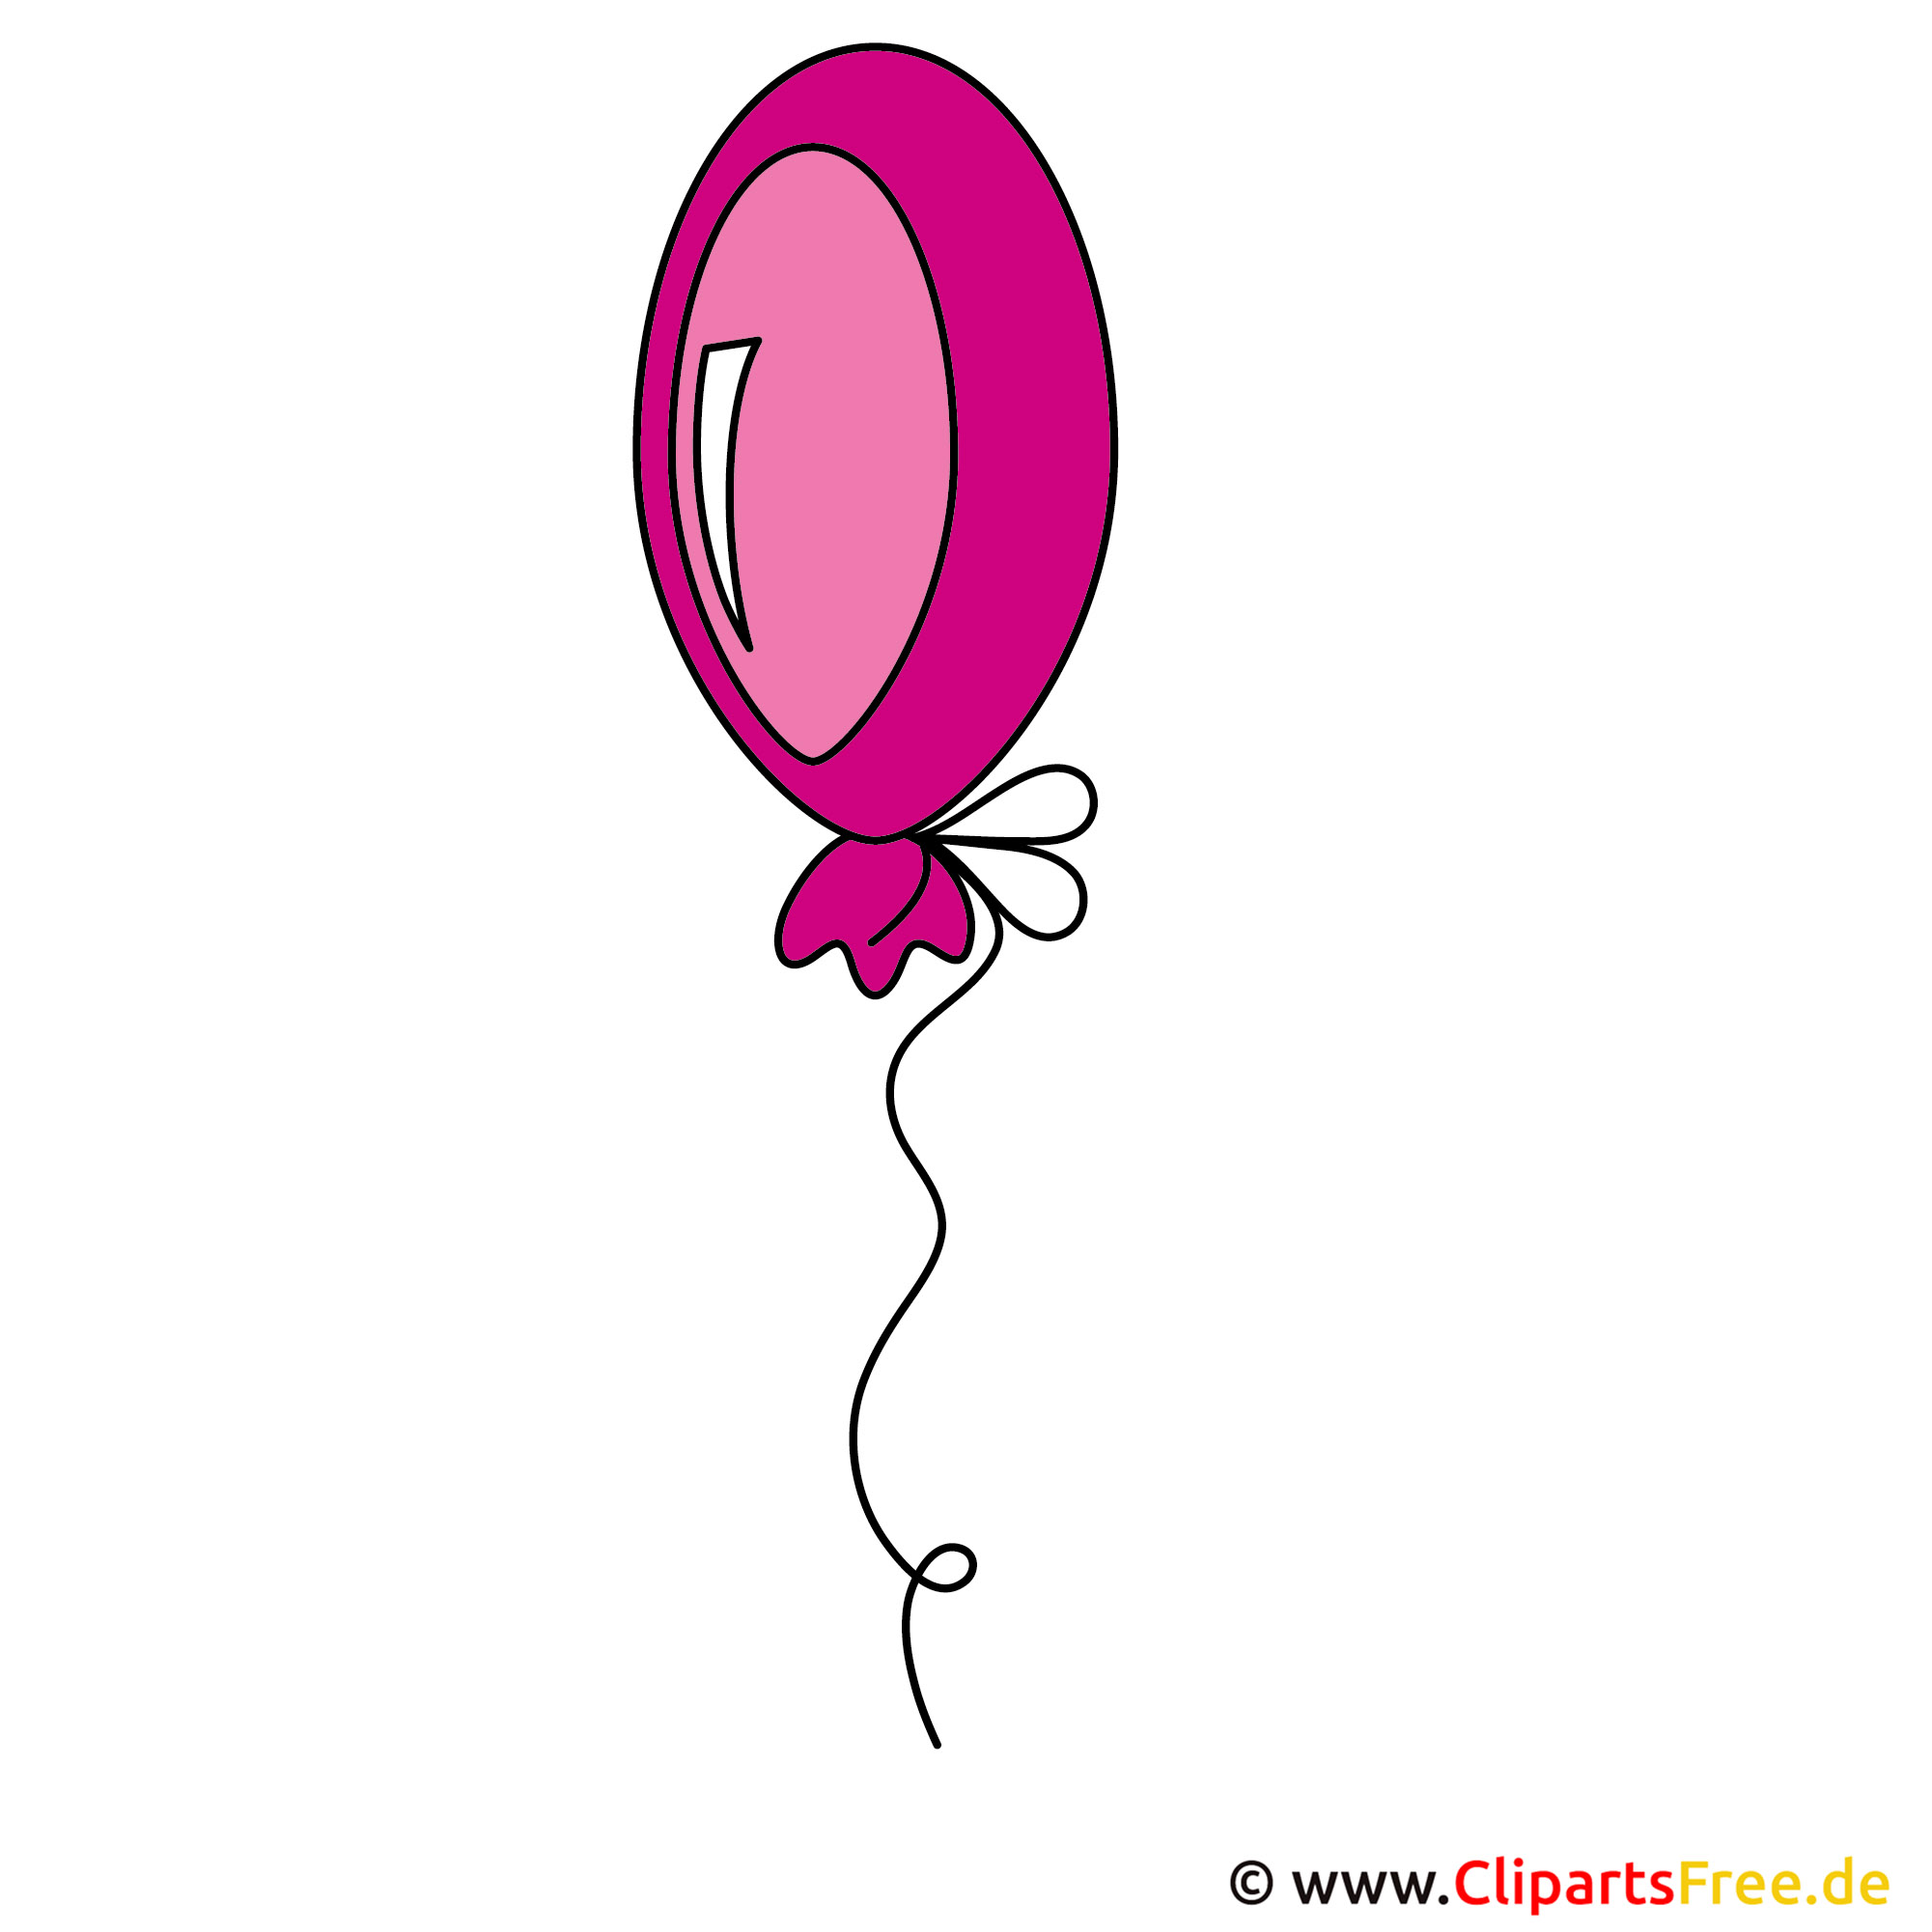 clipart kostenlos luftballon - photo #2